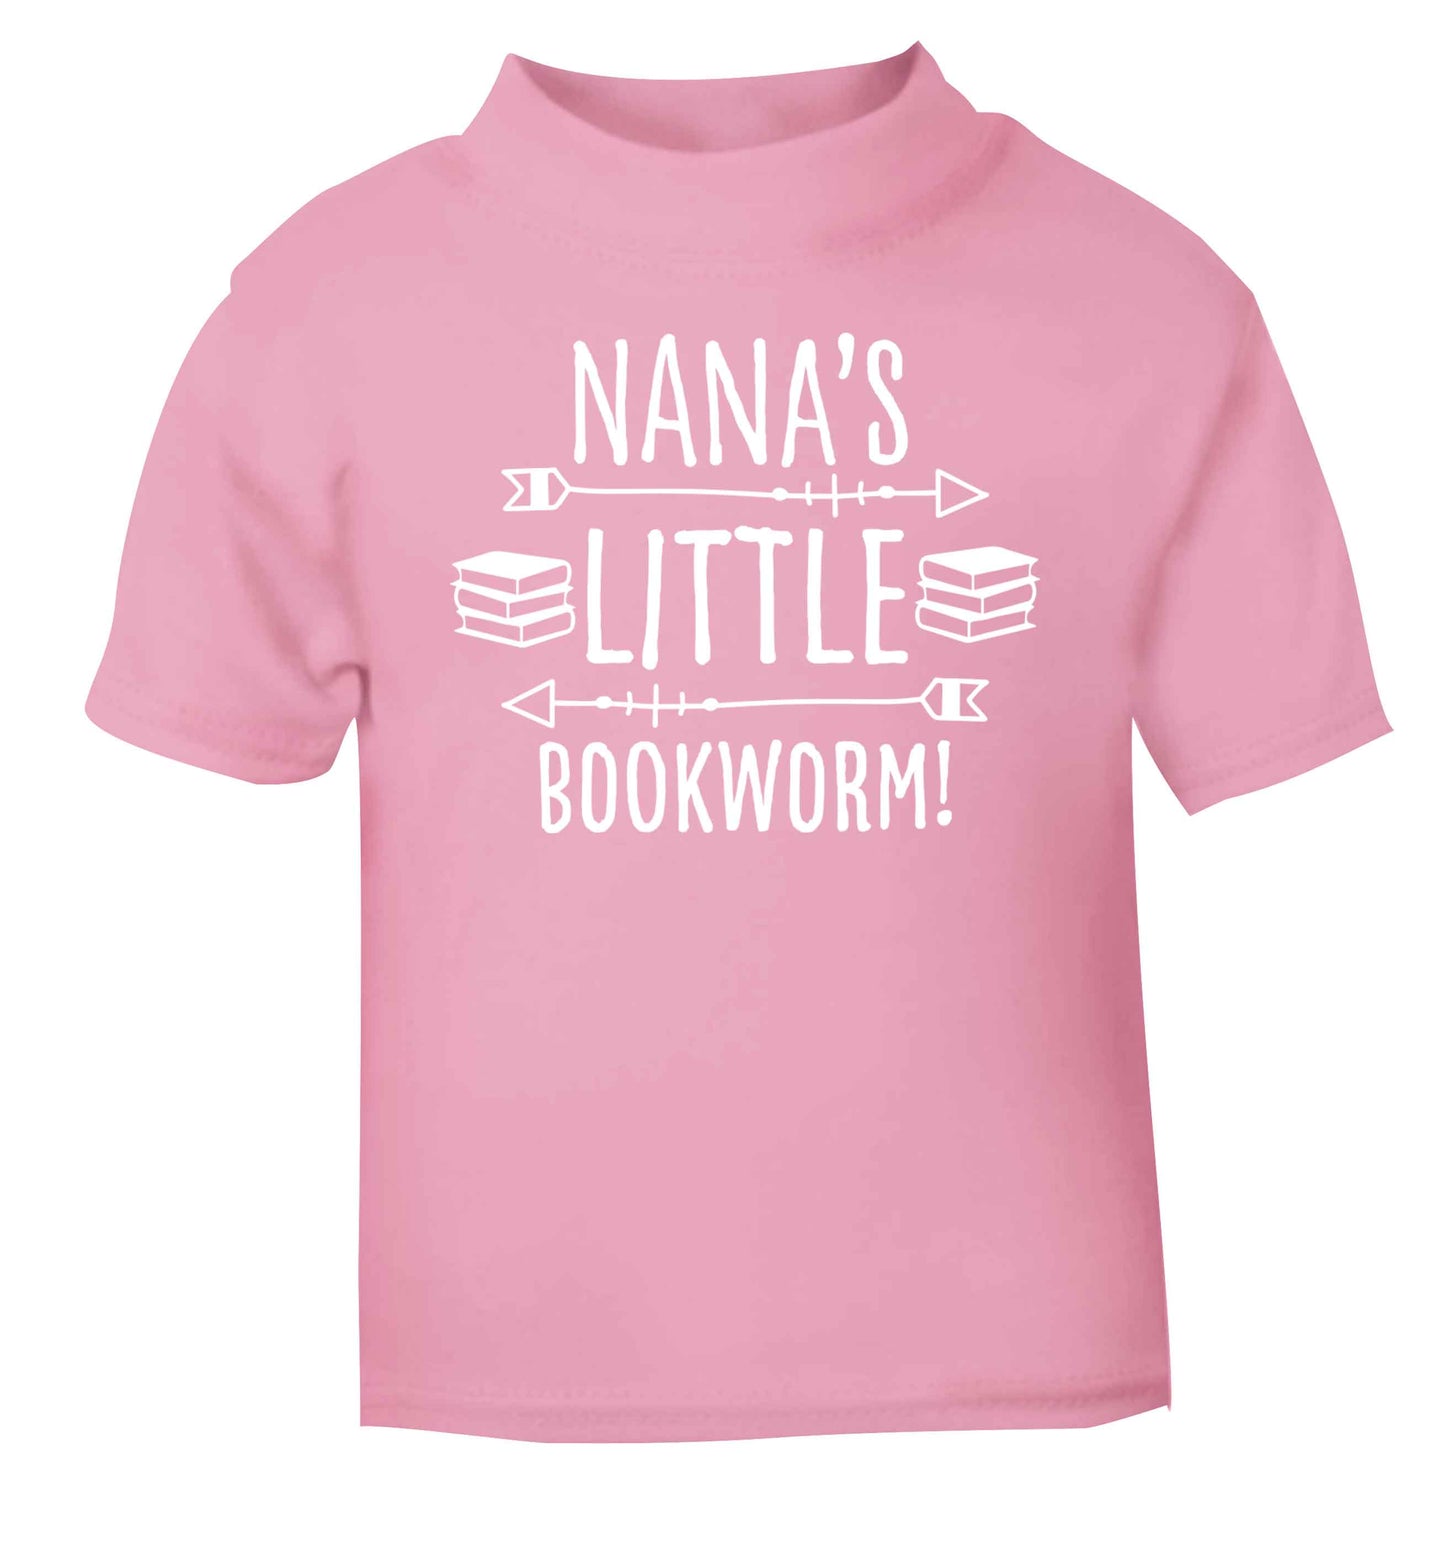 Grandad's little bookworm light pink baby toddler Tshirt 2 Years